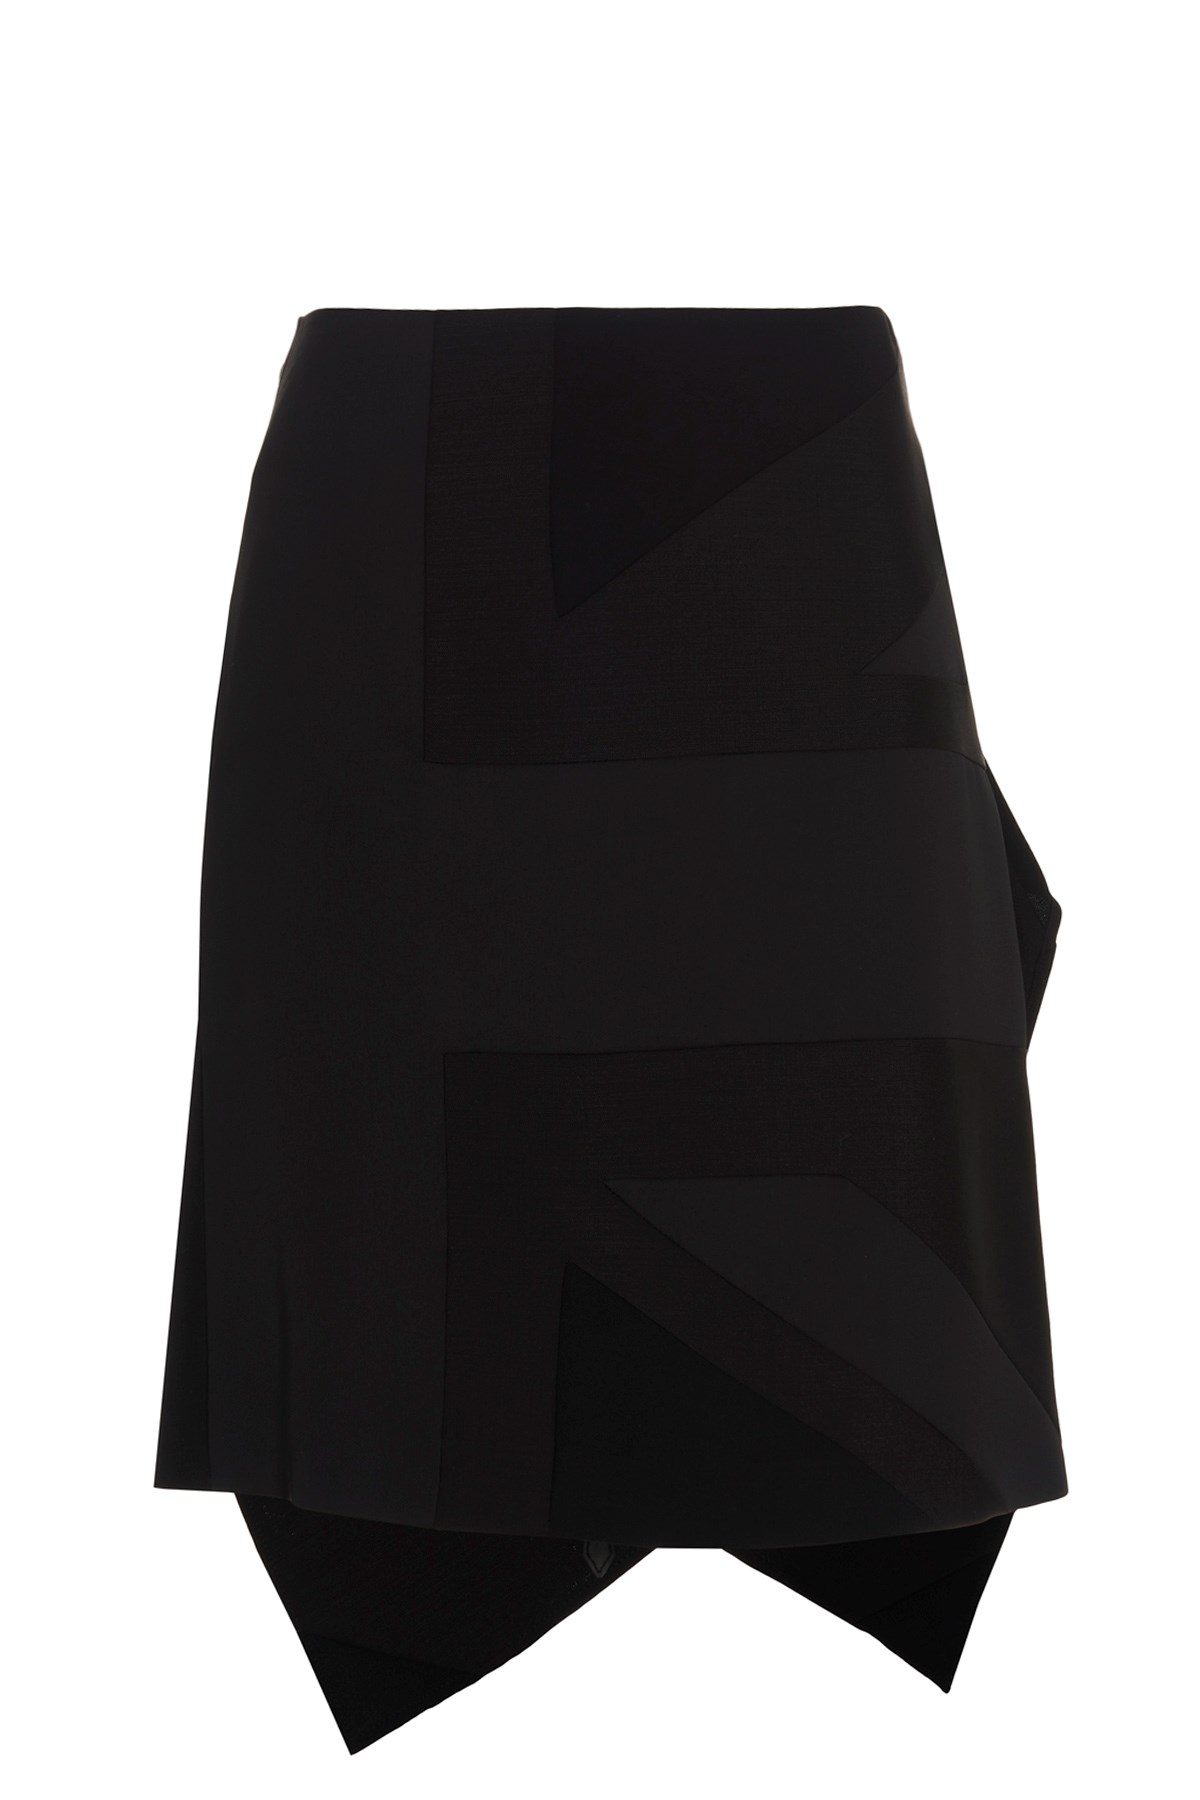 BURBERRY 'Union Jack' Skirt